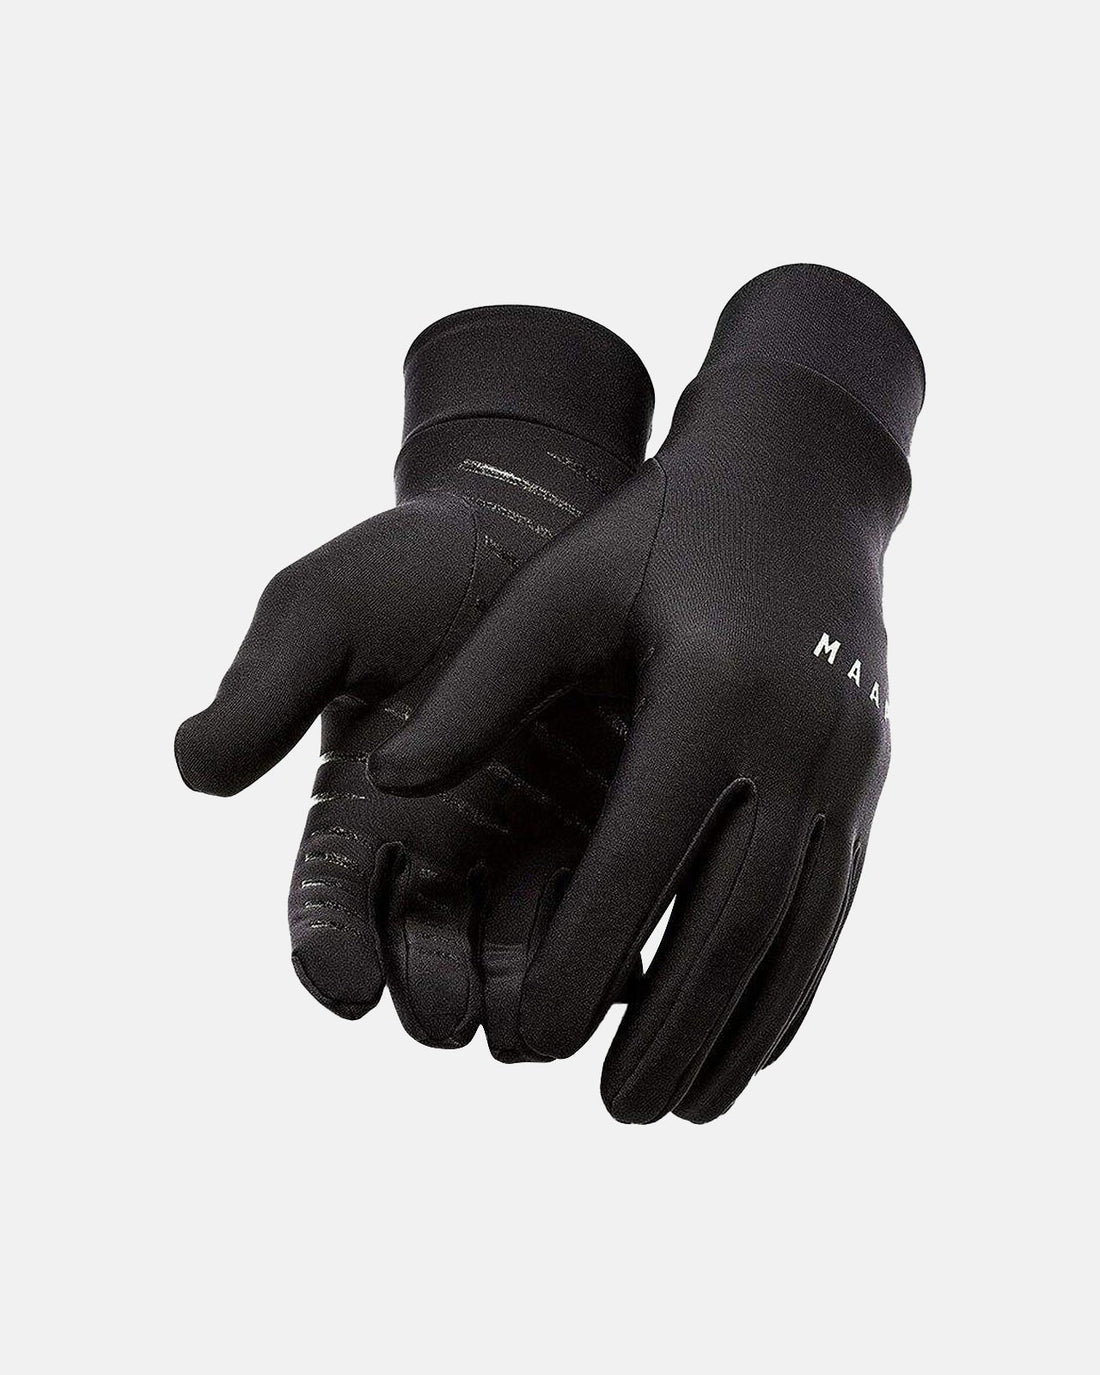 MAAP Base Glove - Black